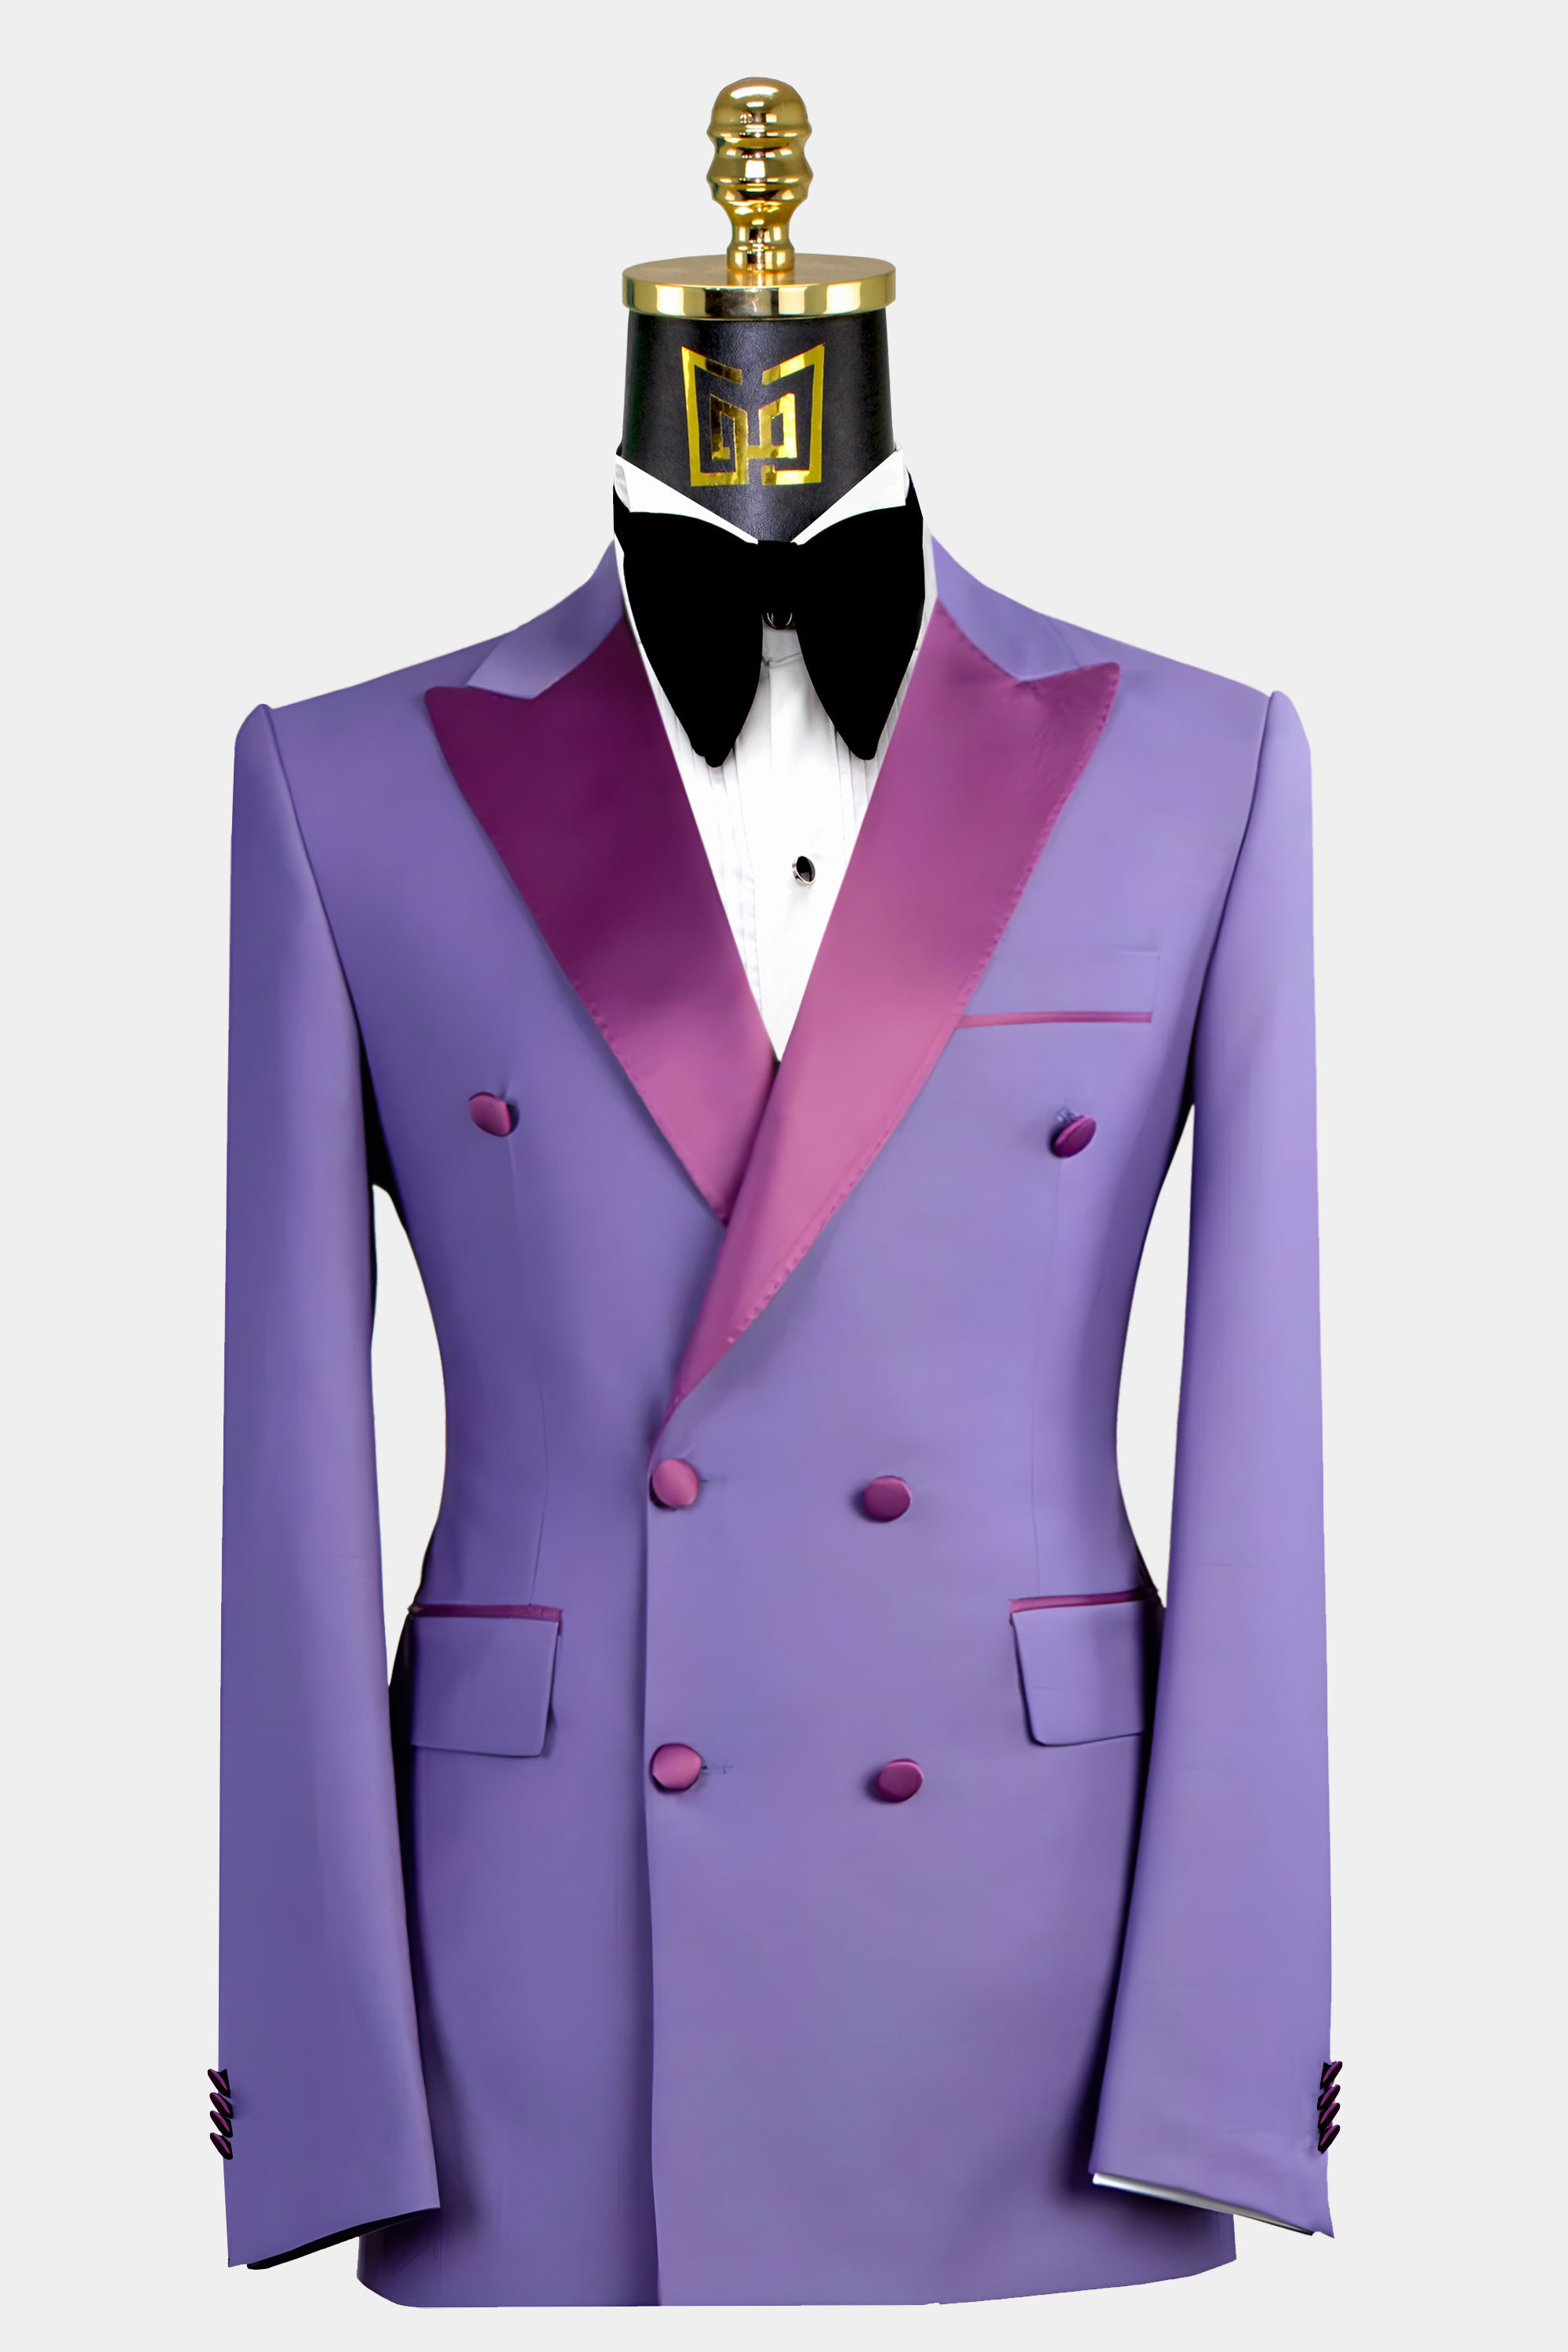 Mens-Lavender-Tuxedo-Jacket-from-Gentlemansguru.com